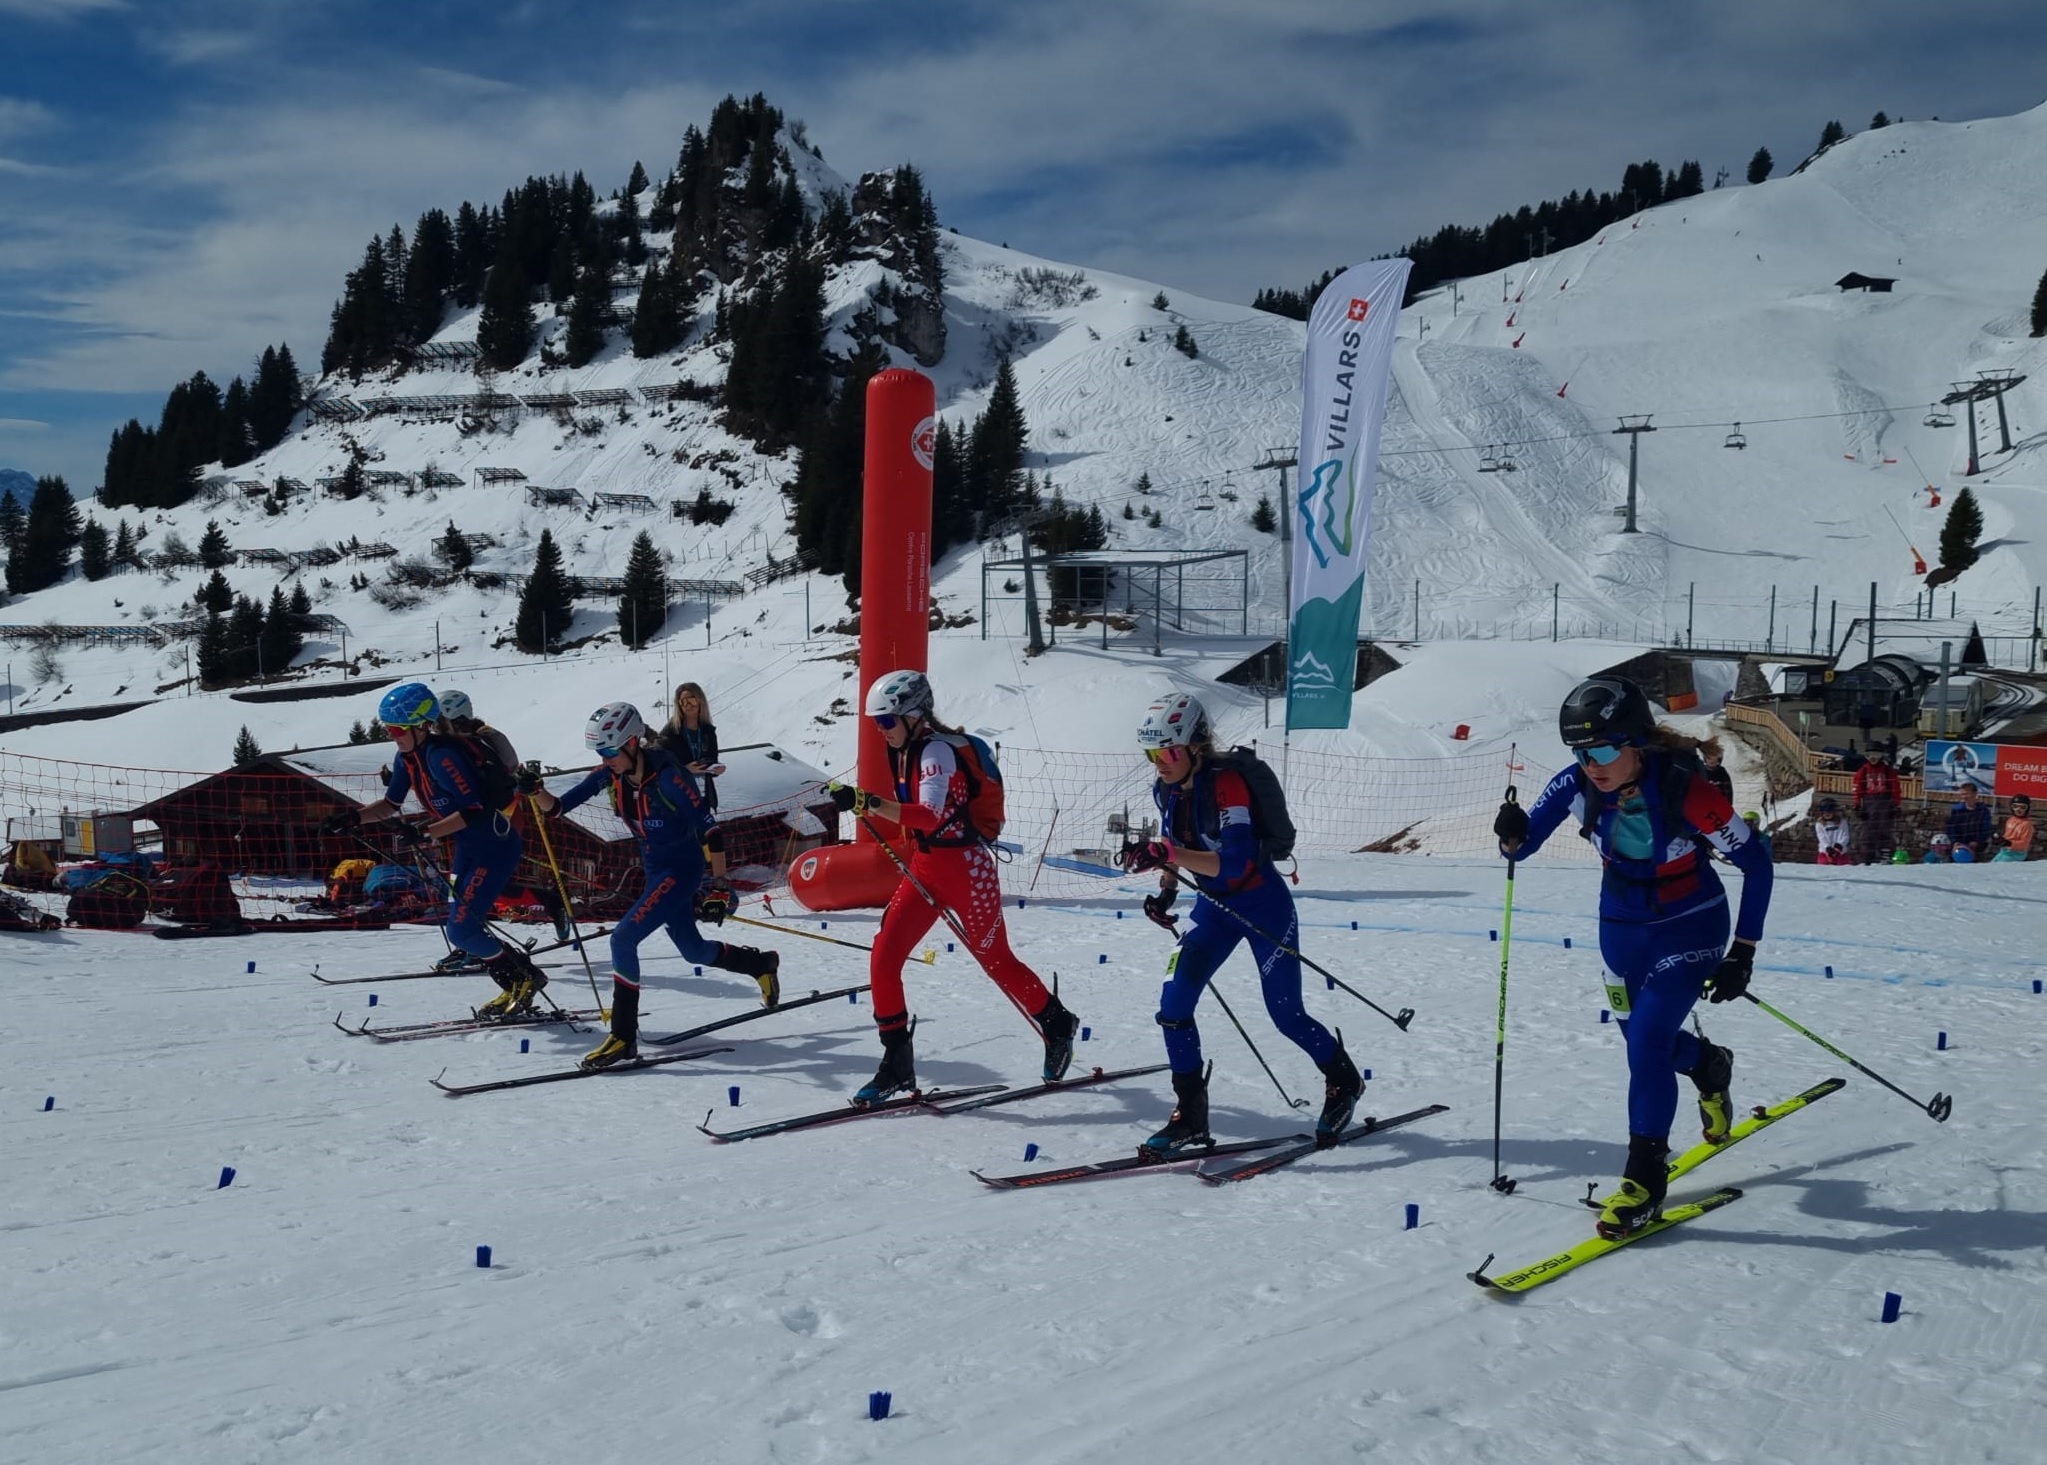 Ski alpinisme: La Leysenoude Thibe Deseyn triomphe à Villars